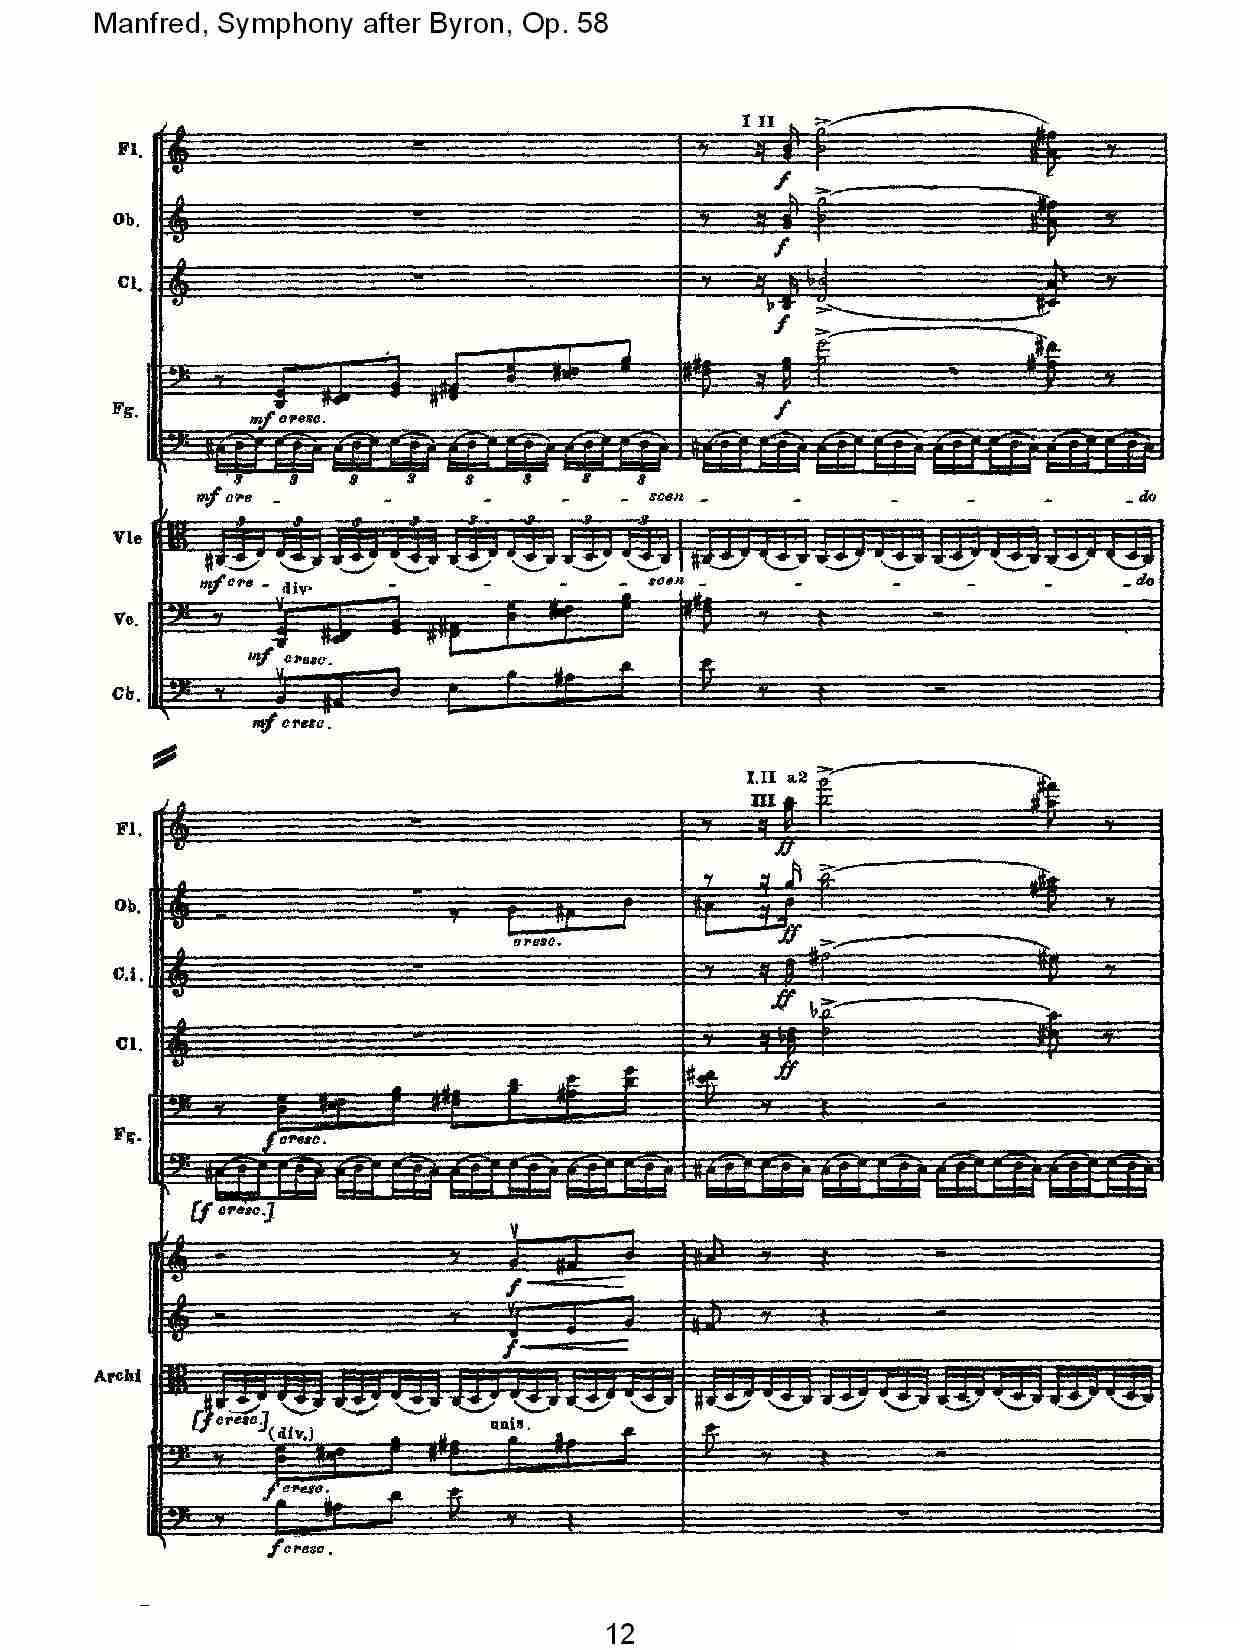 Manfred, Symphony after Byron, Op.58第一乐章（一）其它曲谱（图12）